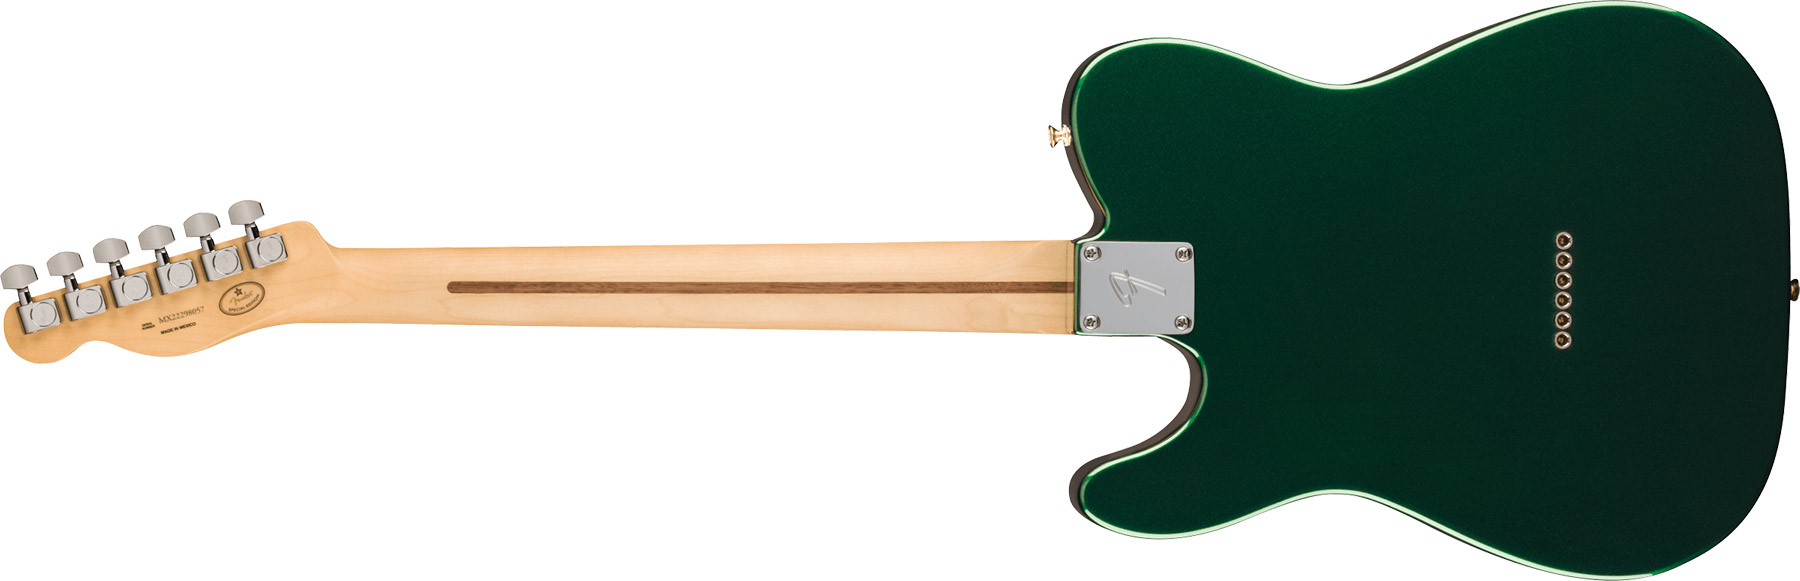 Fender Tele Player Ltd Mex 2s Seymour Duncan Mn - British Racing Green - Tel shape electric guitar - Variation 1